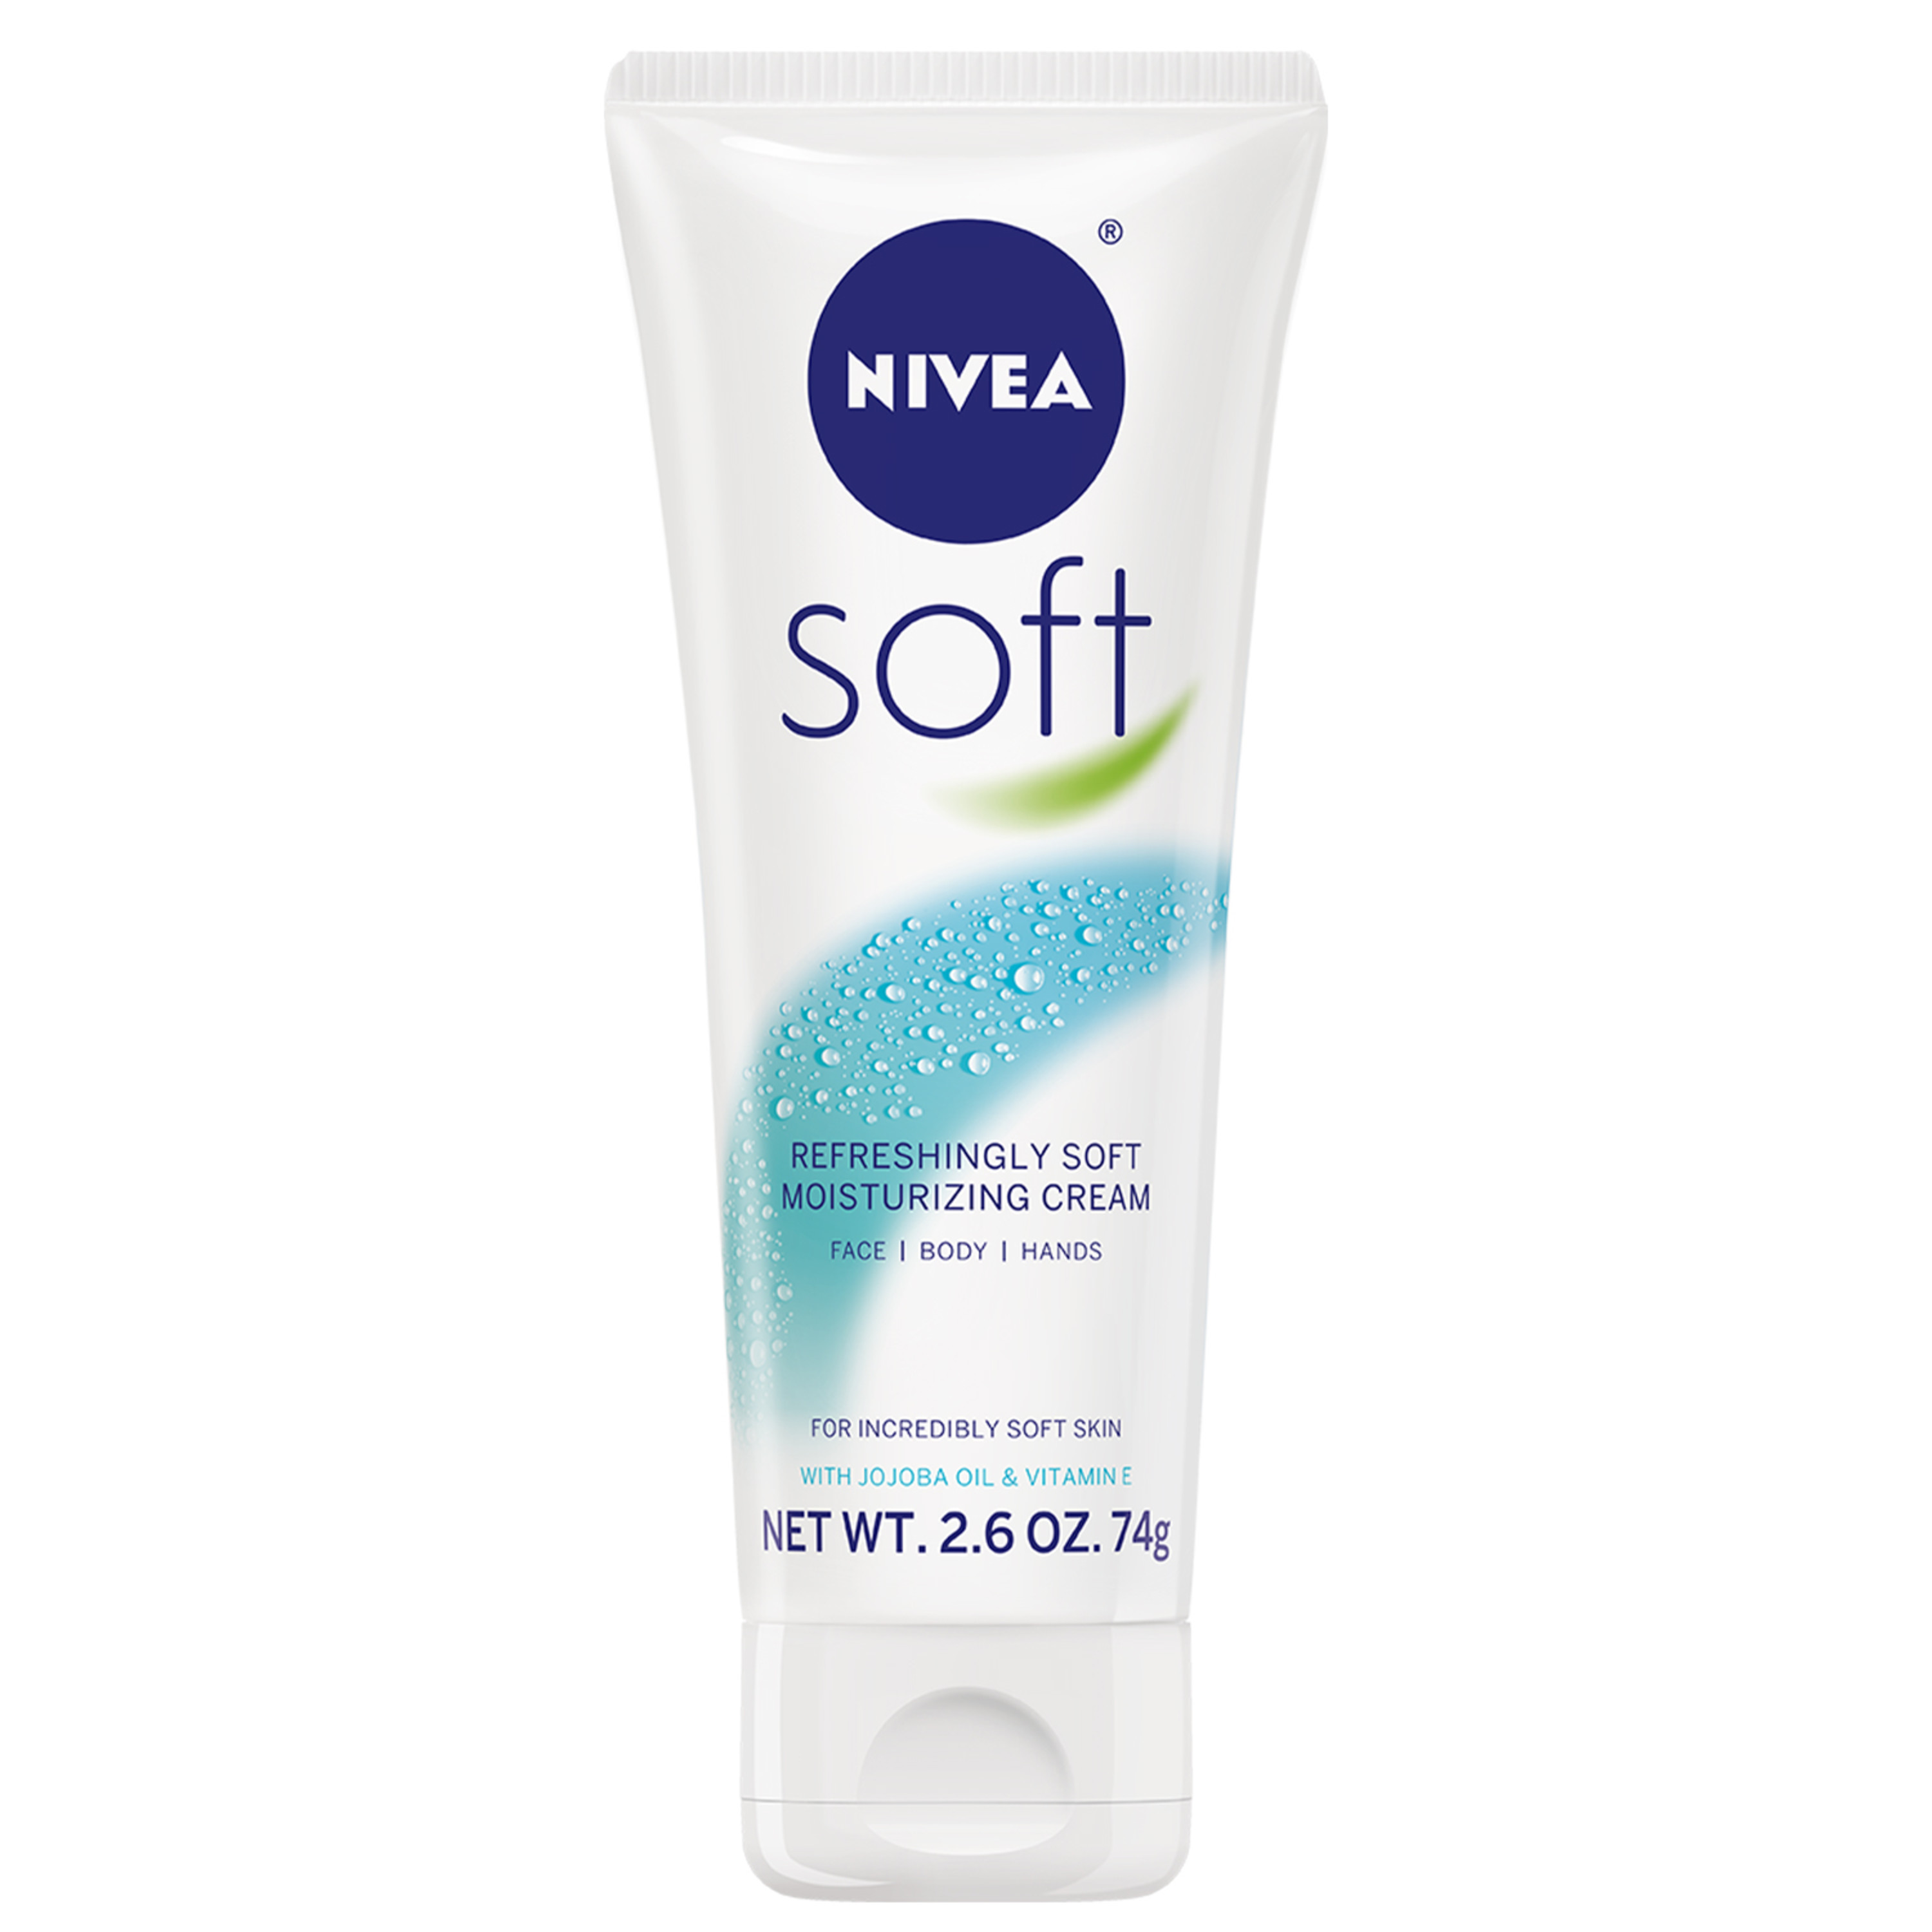 NIVEA Soft Cream, Refreshingly Soft Moisturizing Cream, Body Cream, Face Cream, and Hand Cream, 2.6 Oz Tube - image 1 of 10